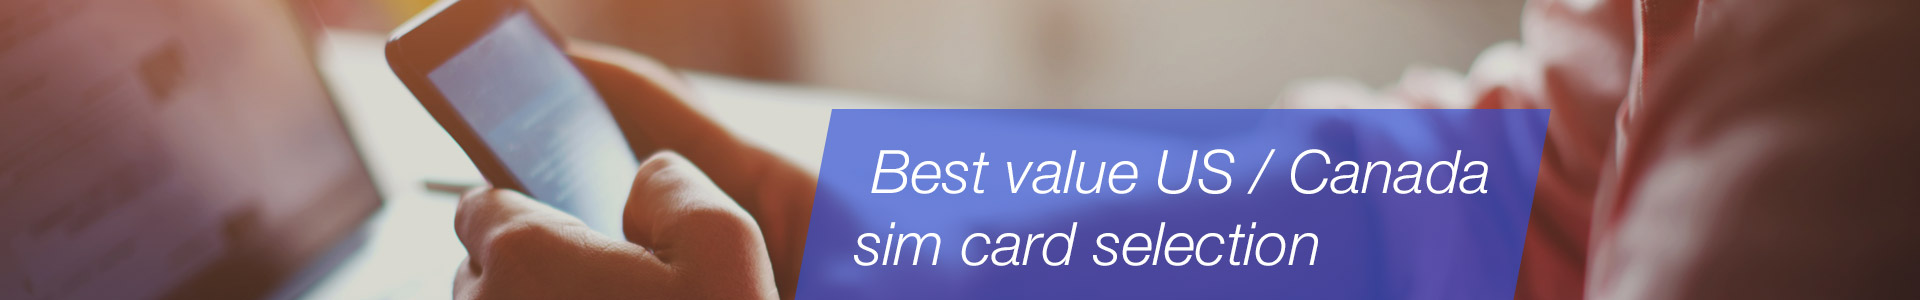 Best value US/Canada sim card